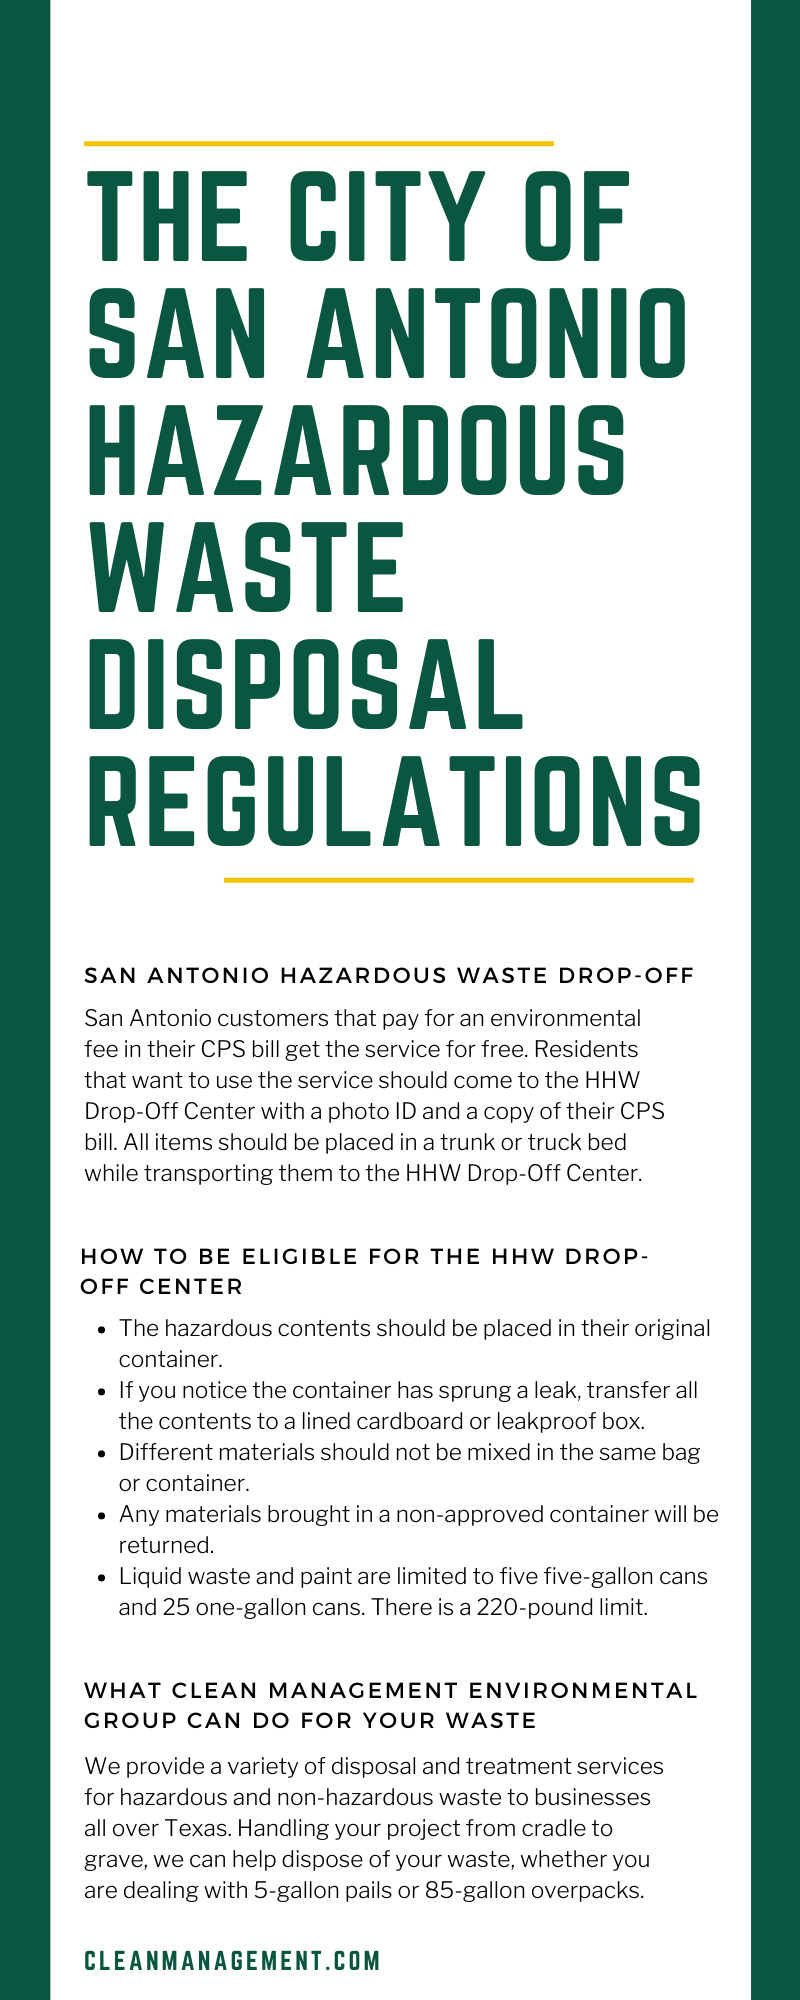 The City of San Antonio Hazardous Waste Disposal Regulations